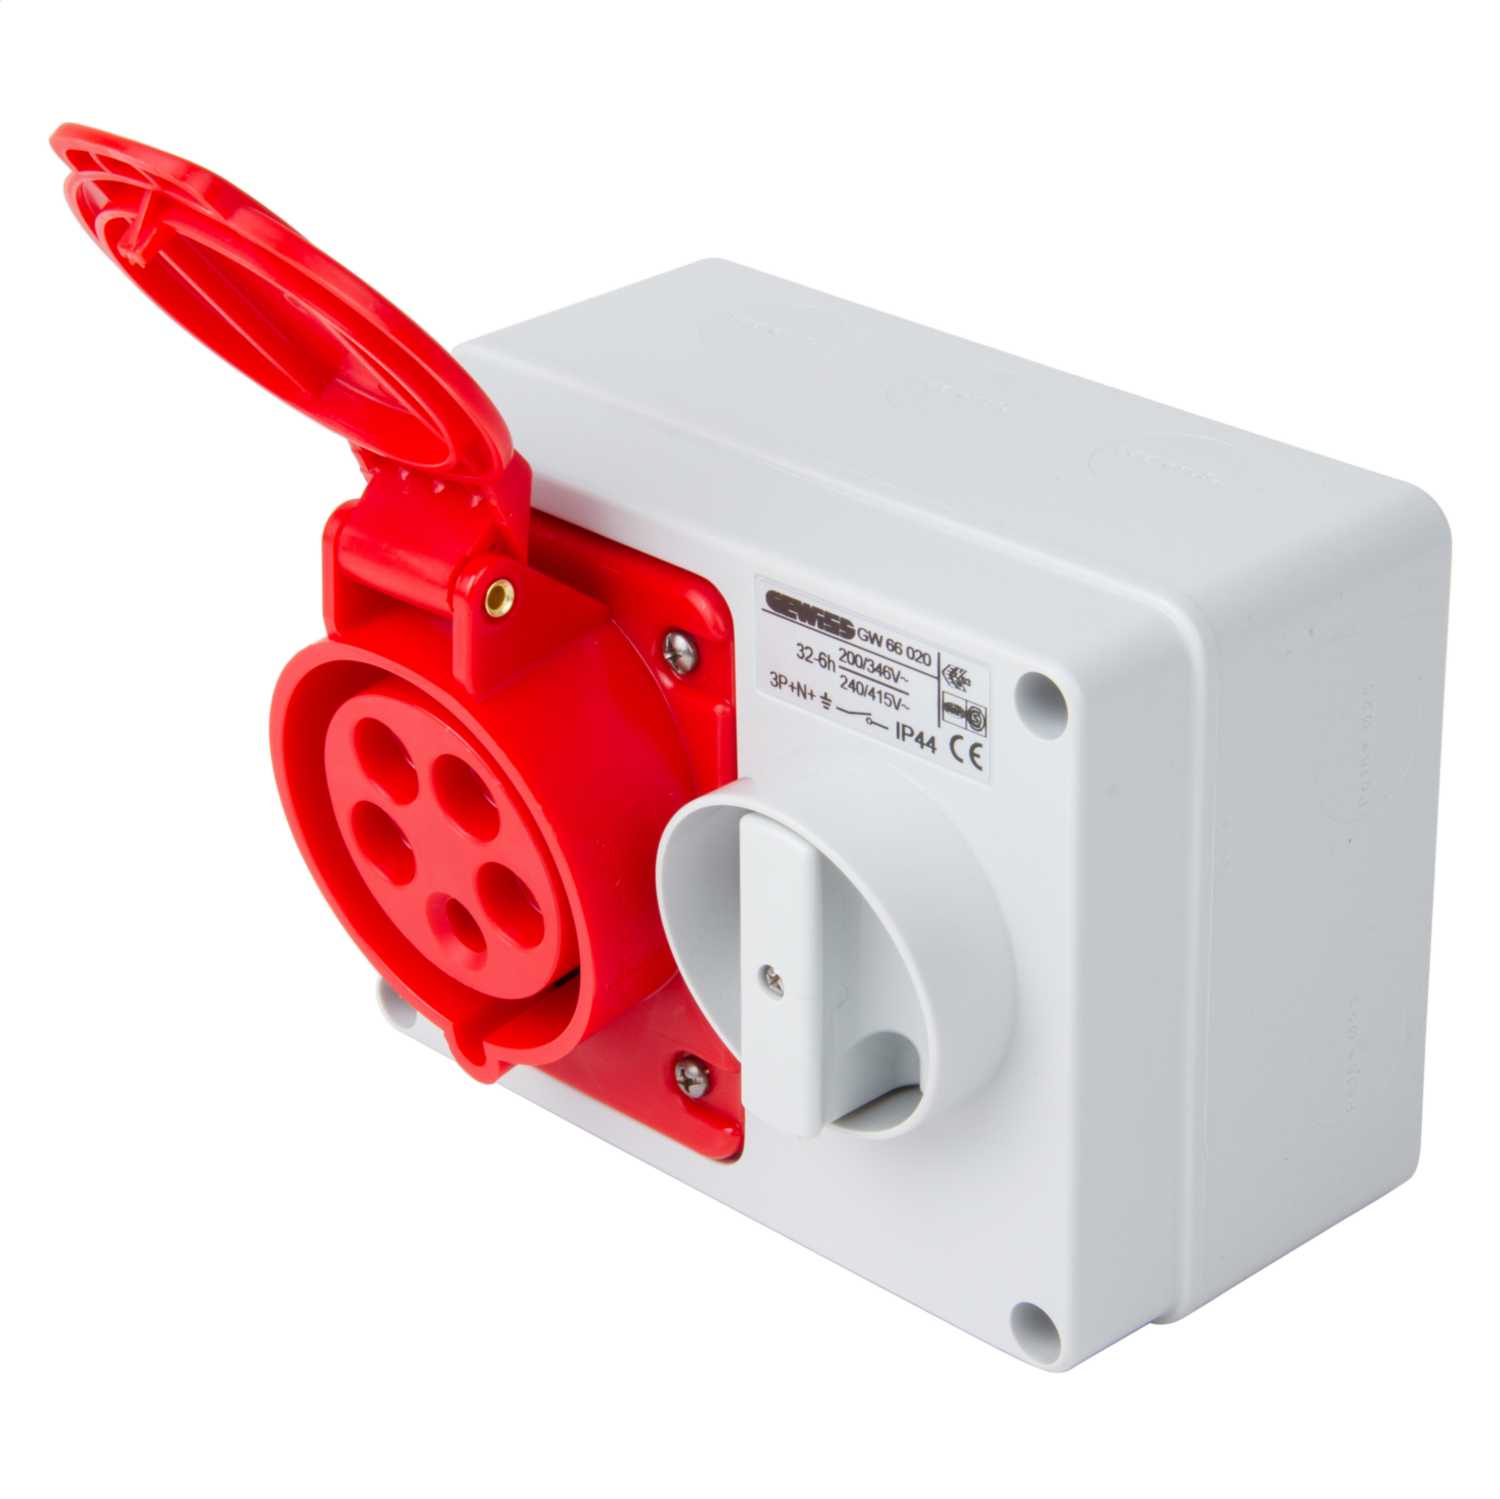 GEWISS GW66474 interlocked red socket outlet 415V  32A  3P+E  IP55